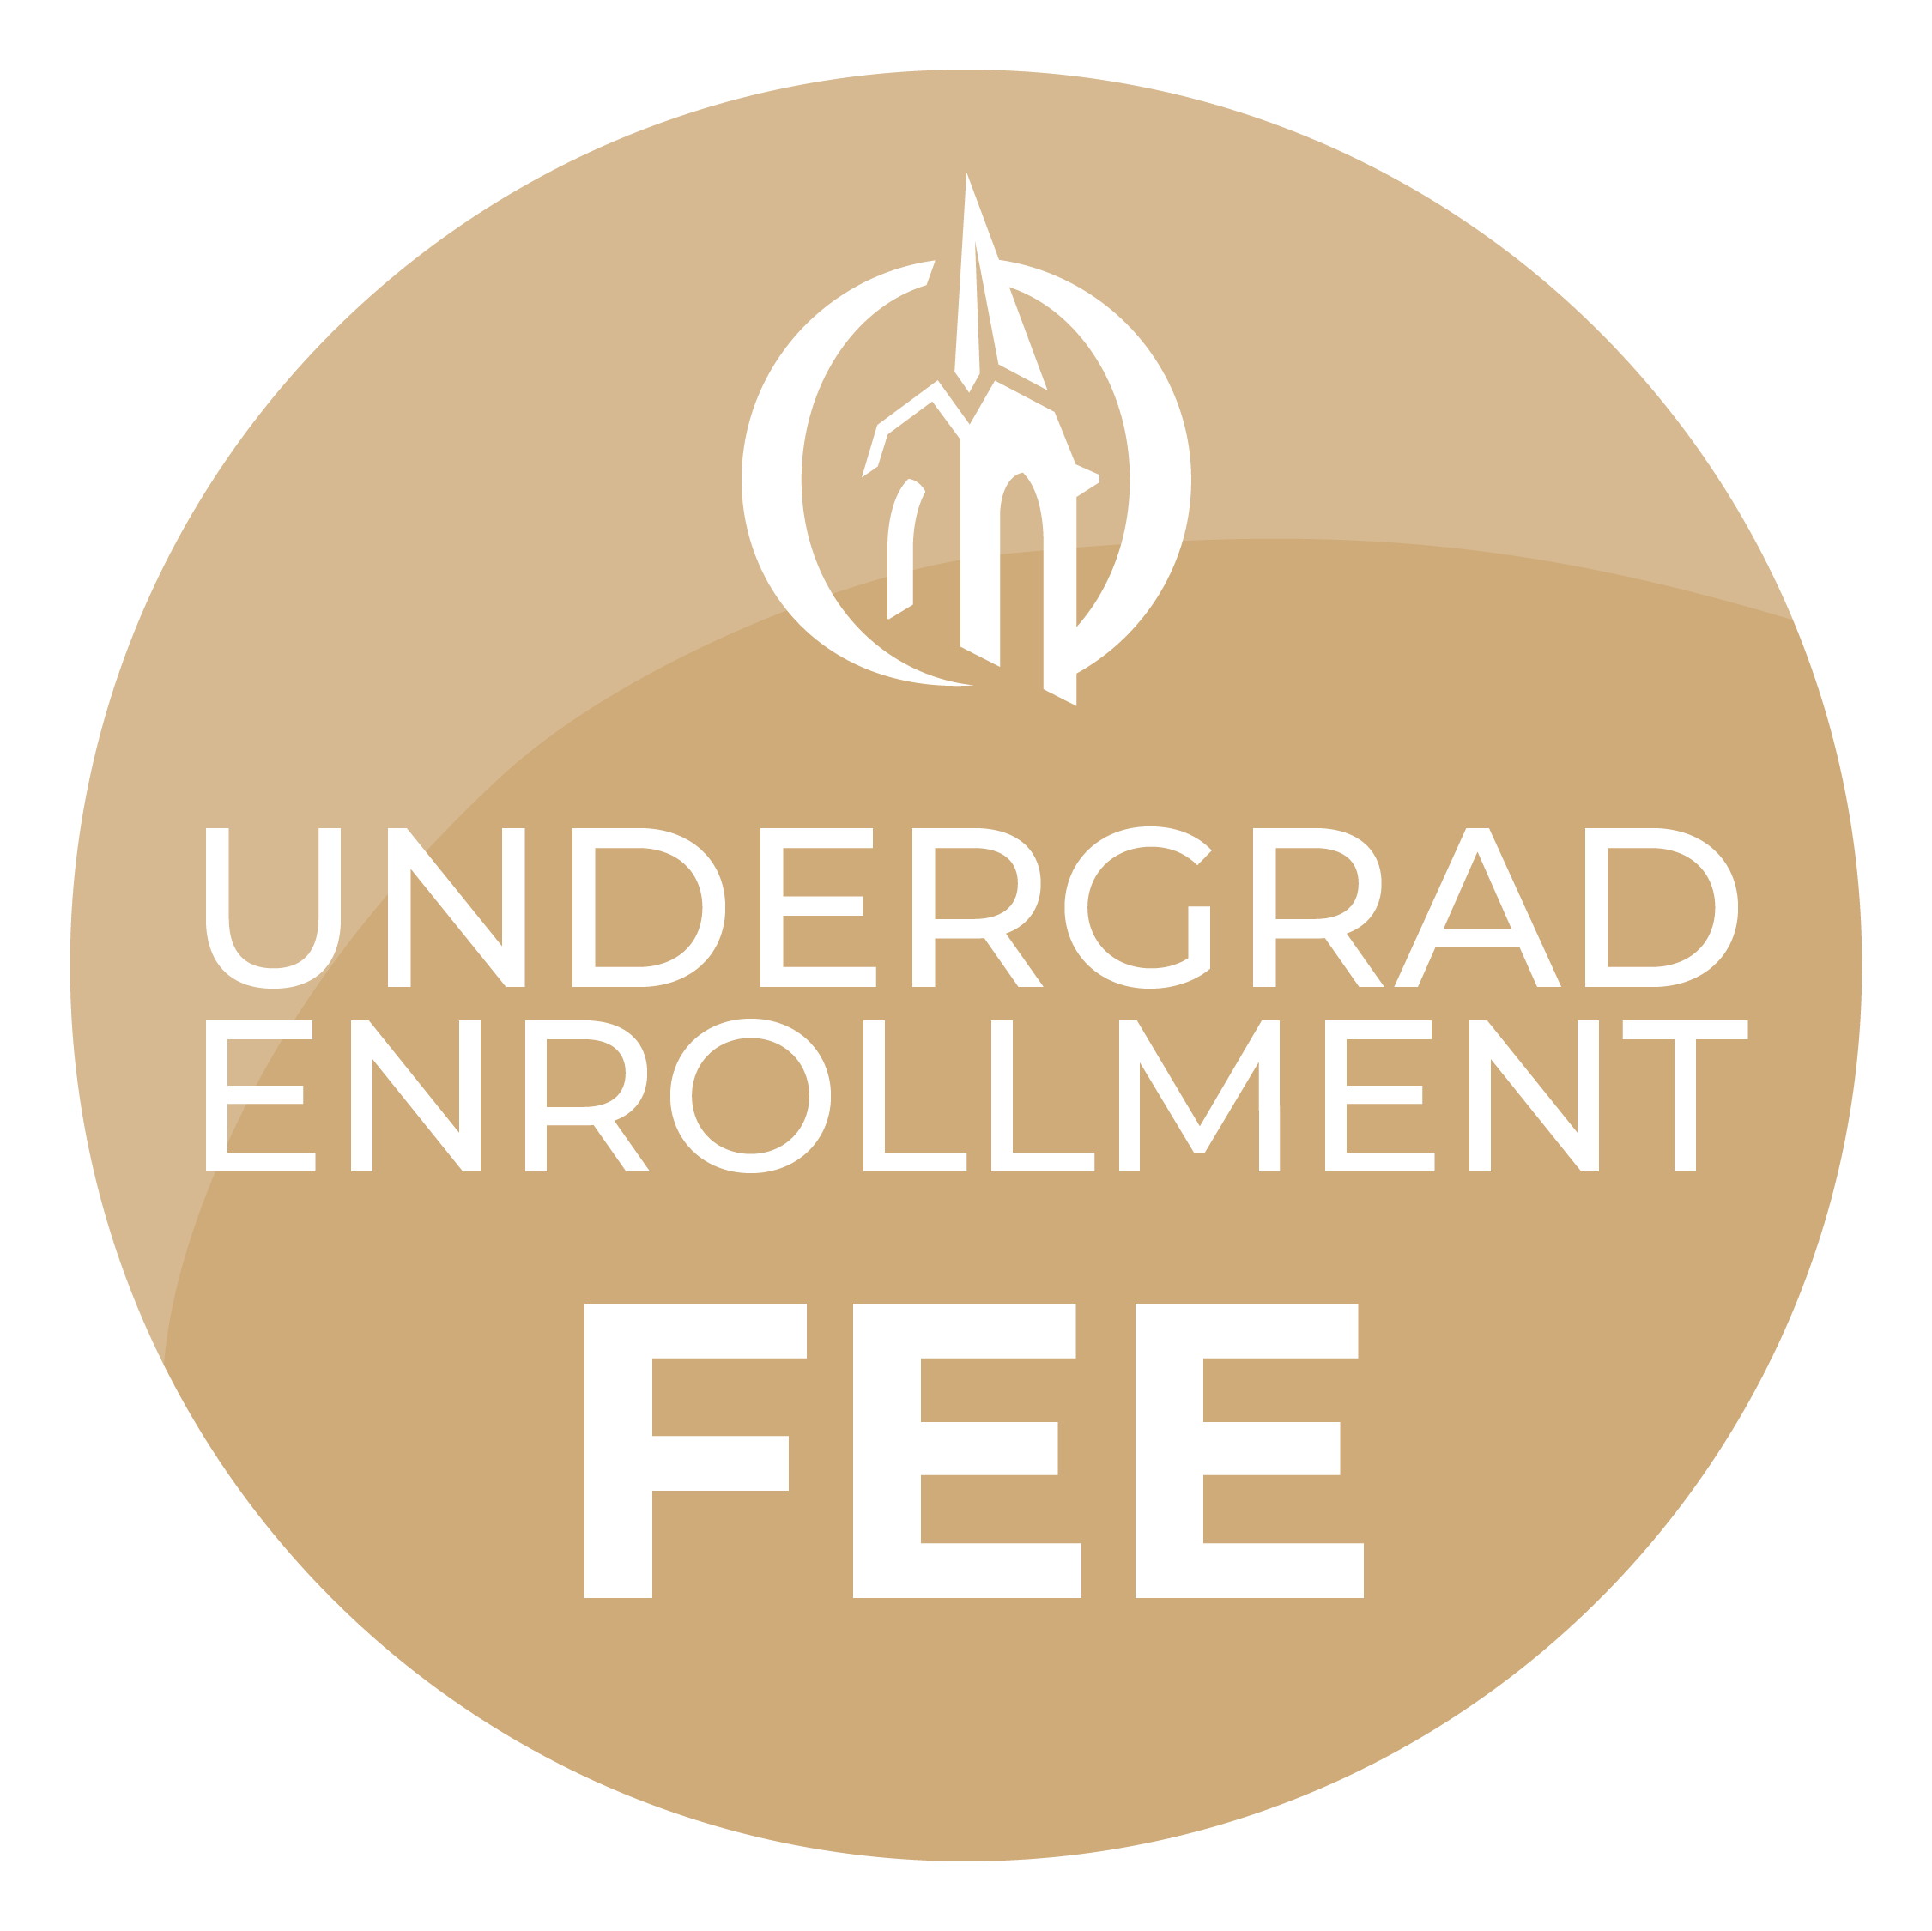 Undergraduate Enrollment Fee Button